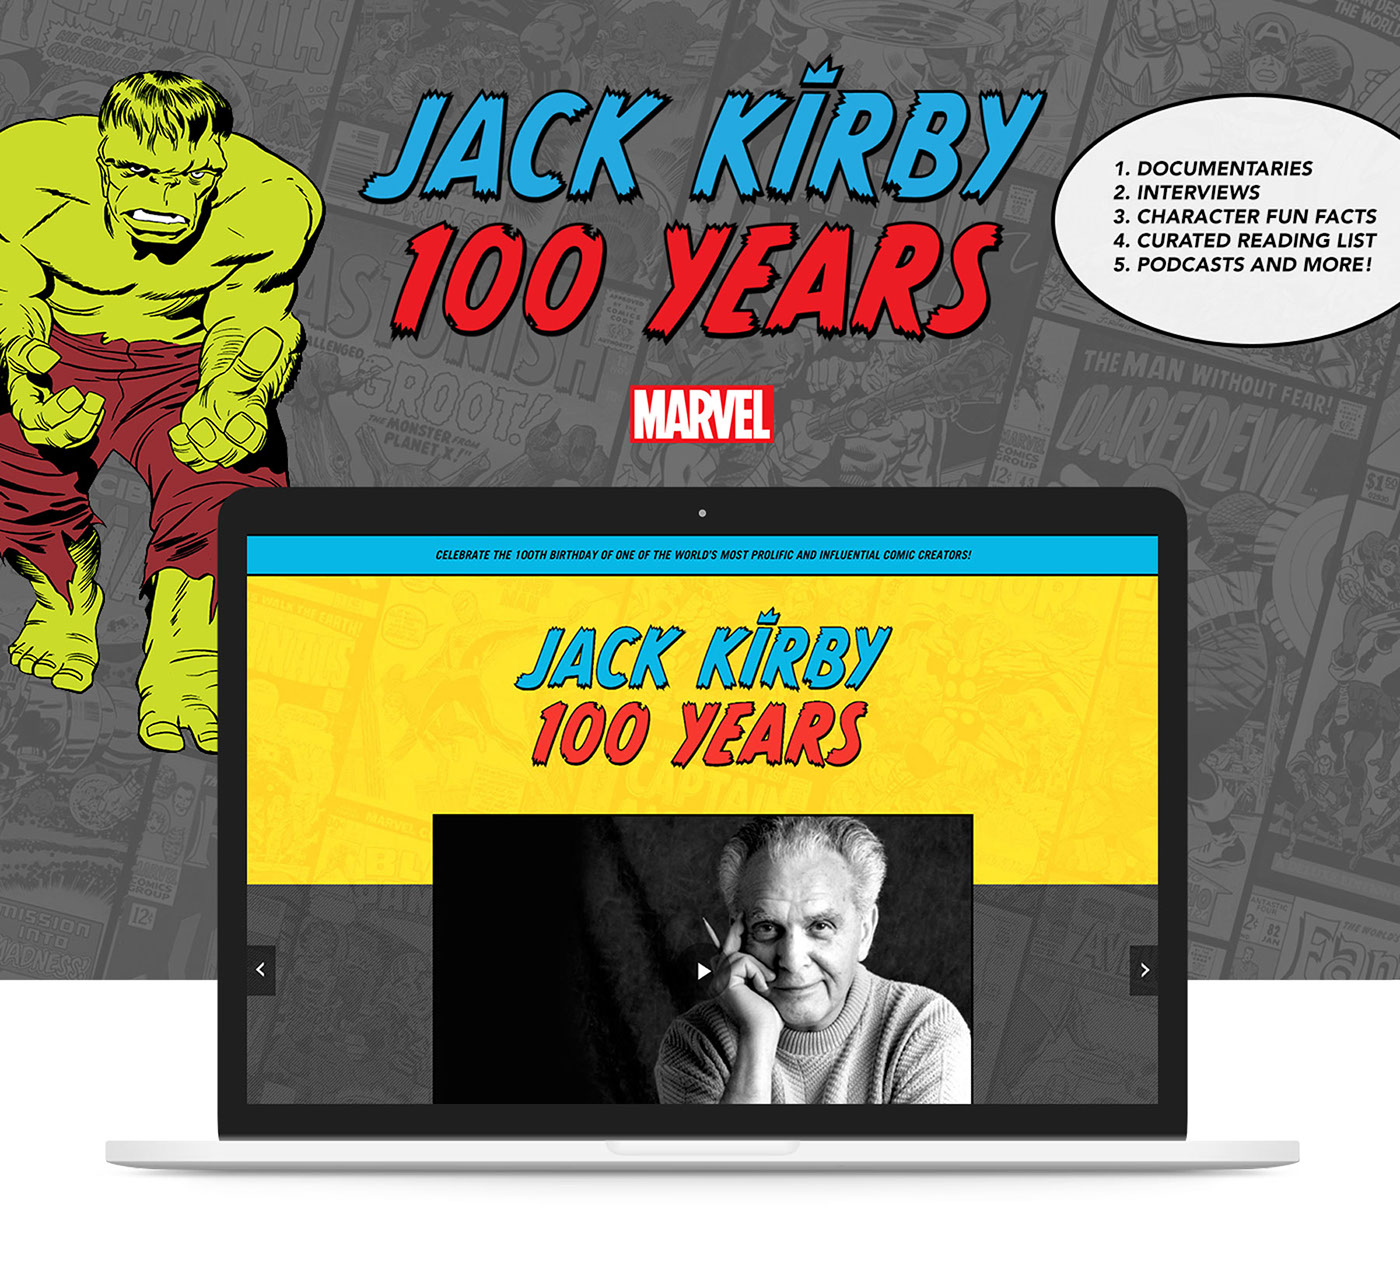 jack kirby marvel comics legend captain america Thor Hulk black panther disney king